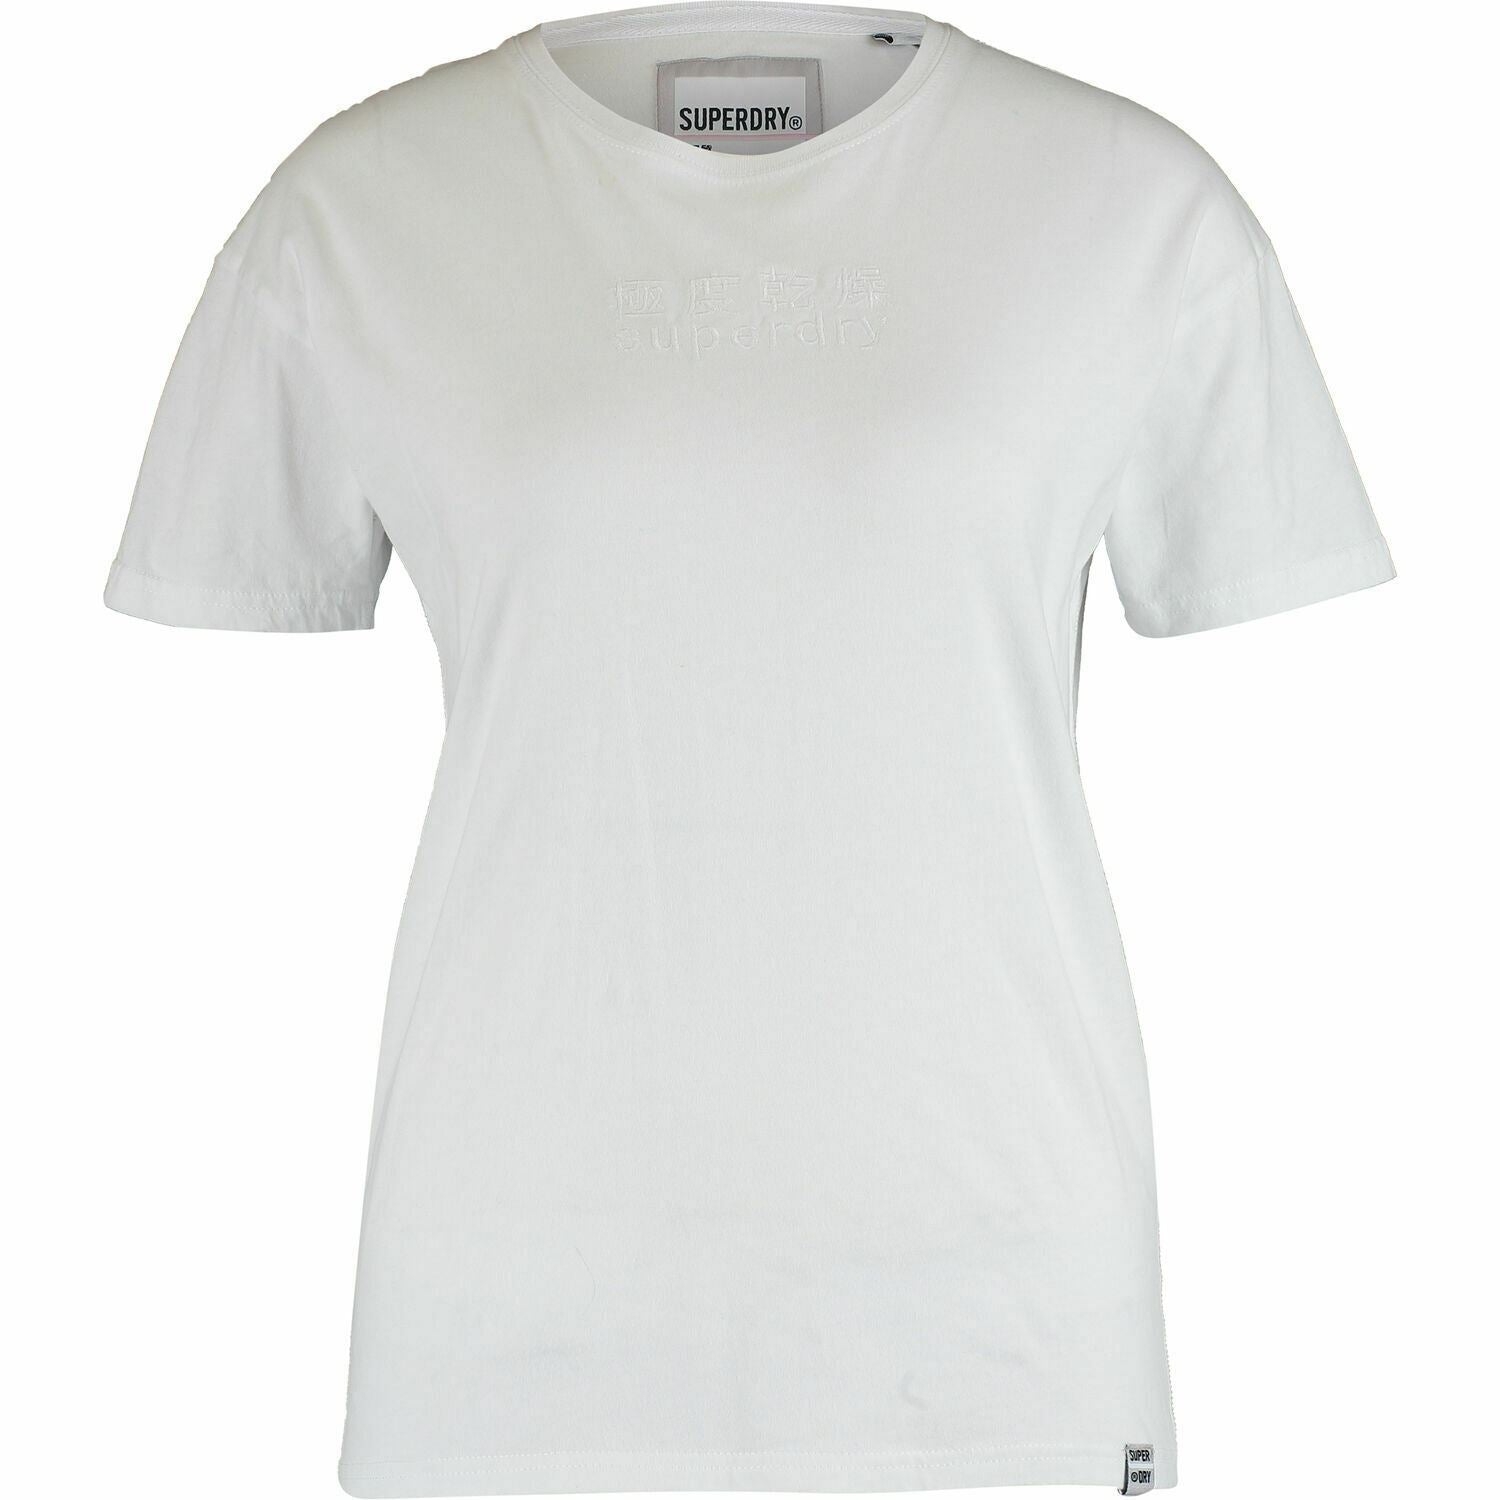 SUPERDRY Women's Short Sleeve Logo T-Shirt, Optic White, size L / UK 14